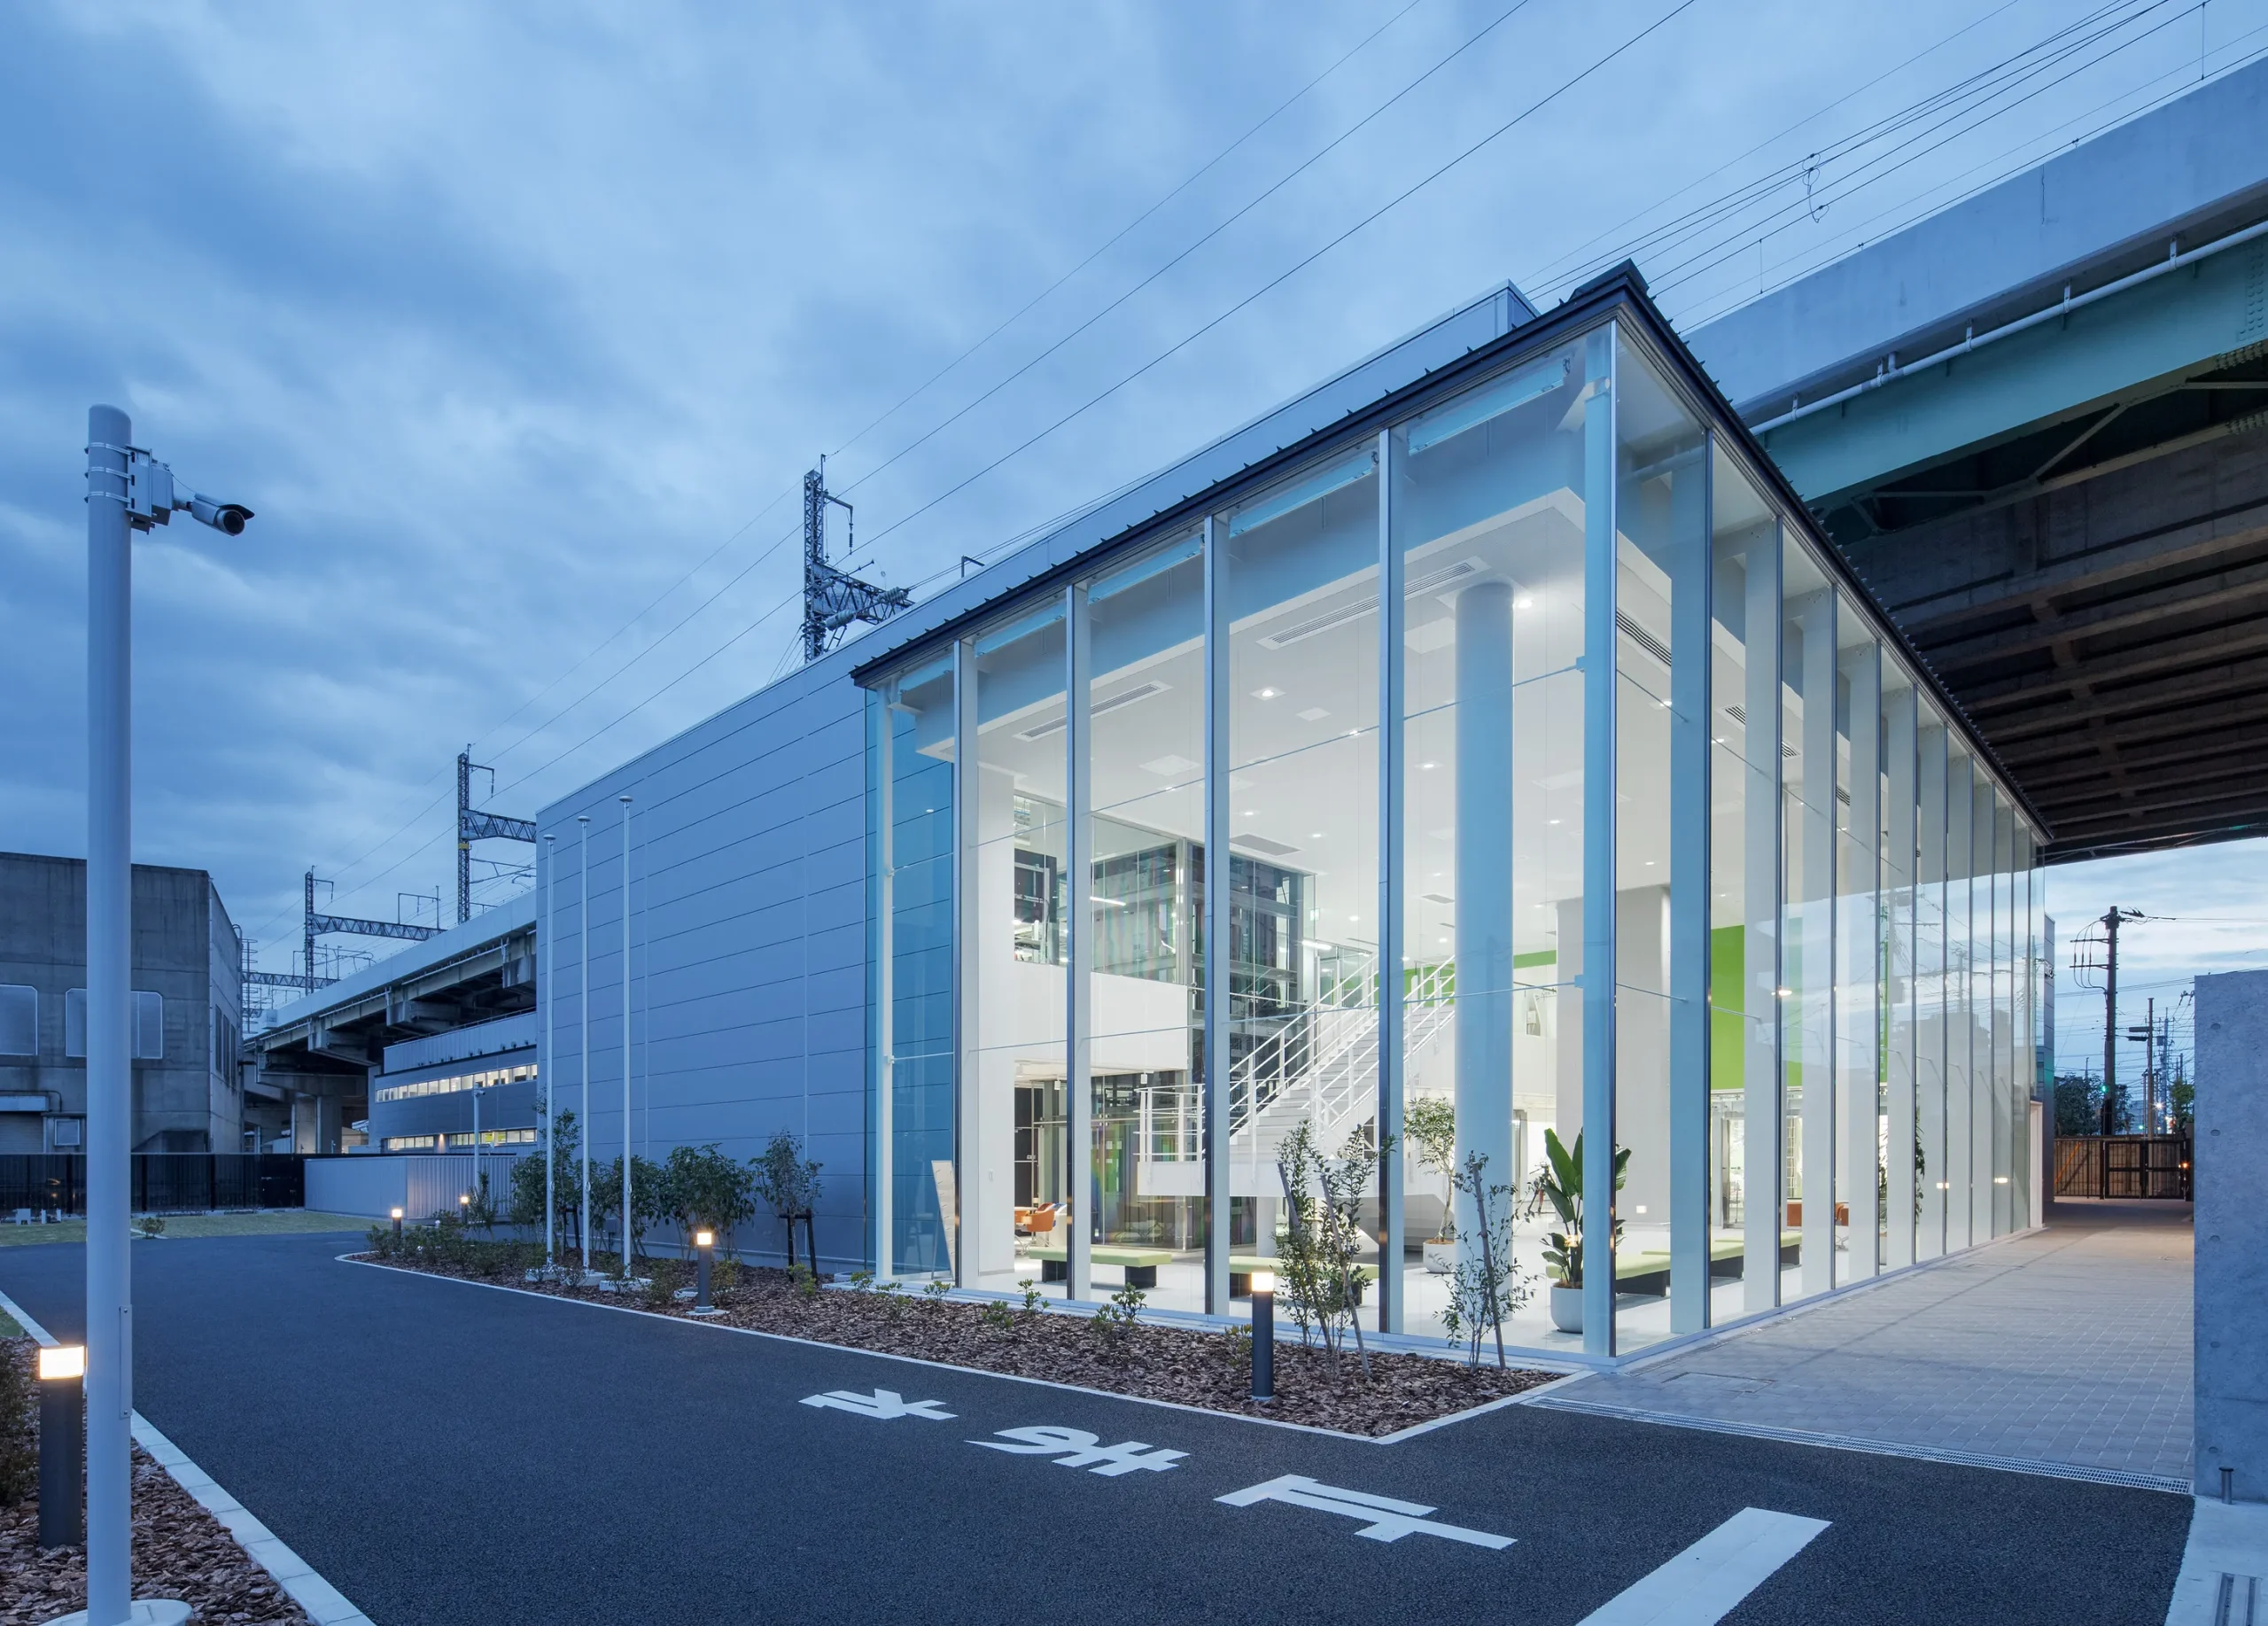 JR東日本メカトロニクス株式会社機械設備技術研修センター新築工事のサムネイル画像です